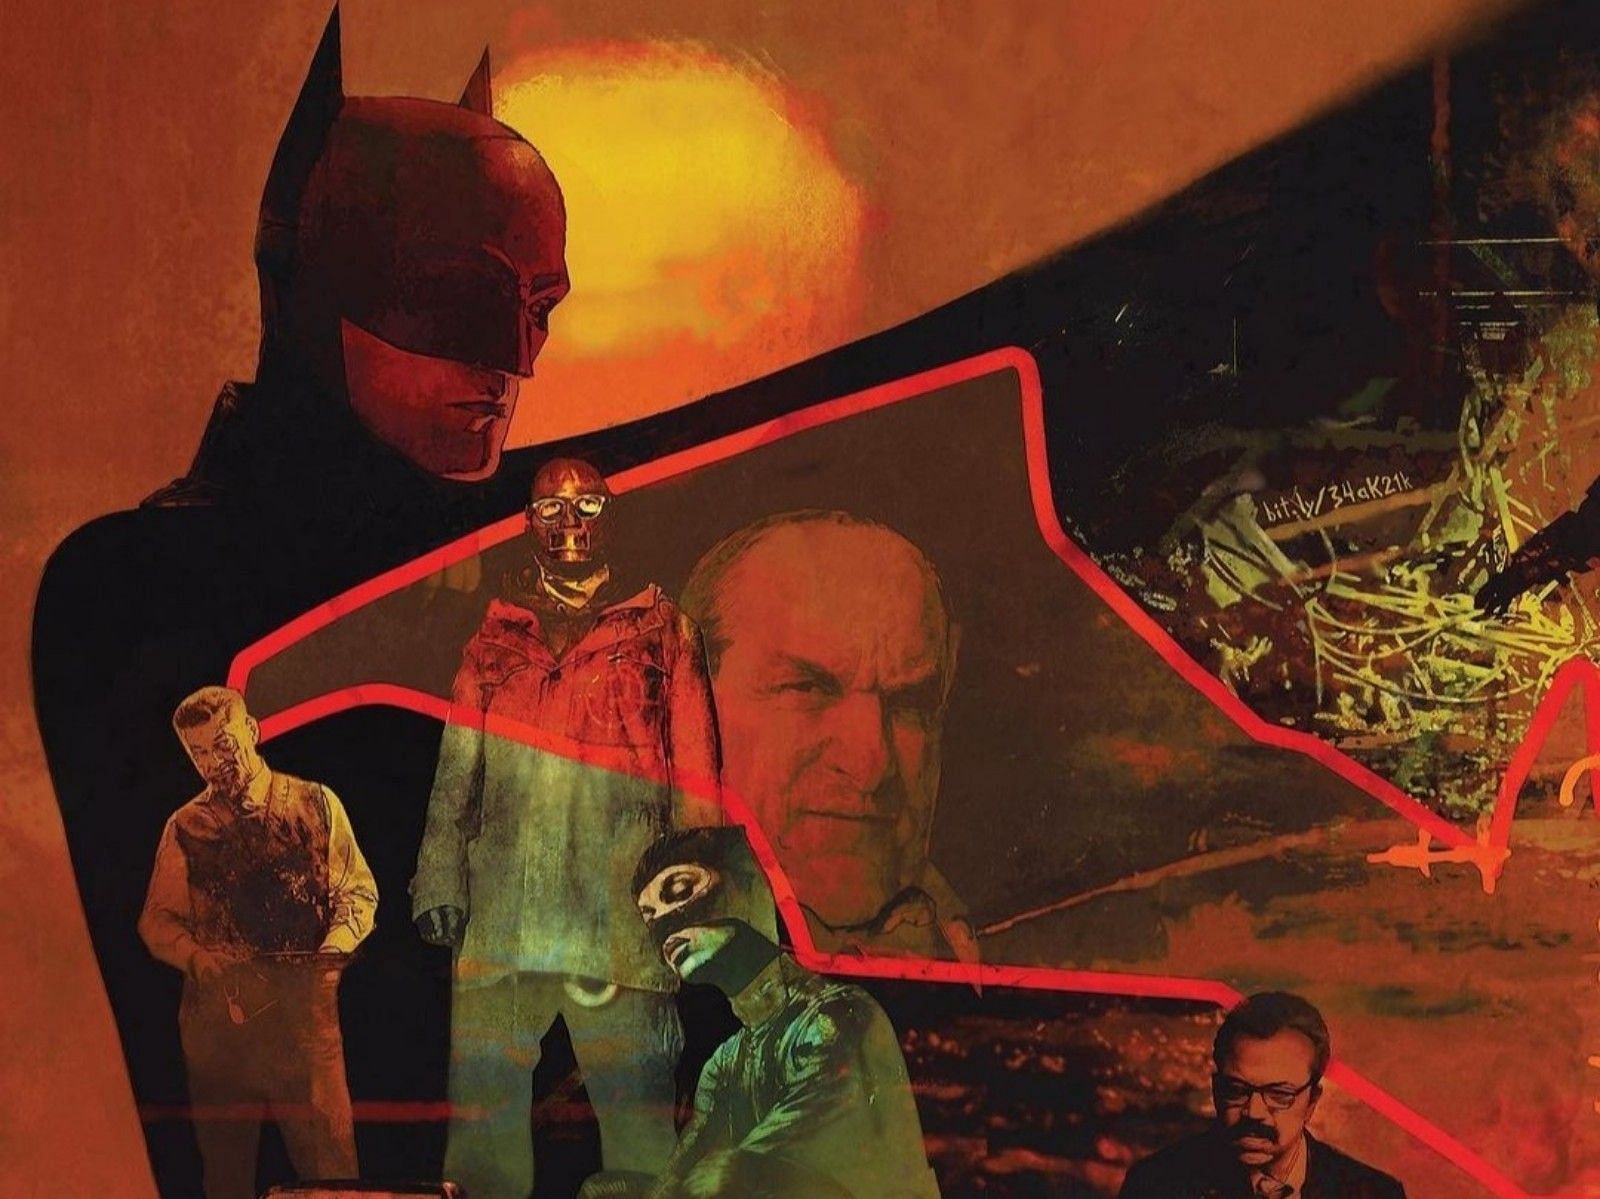 Artwork for The Batman (Image via @thebatman on Instagram)